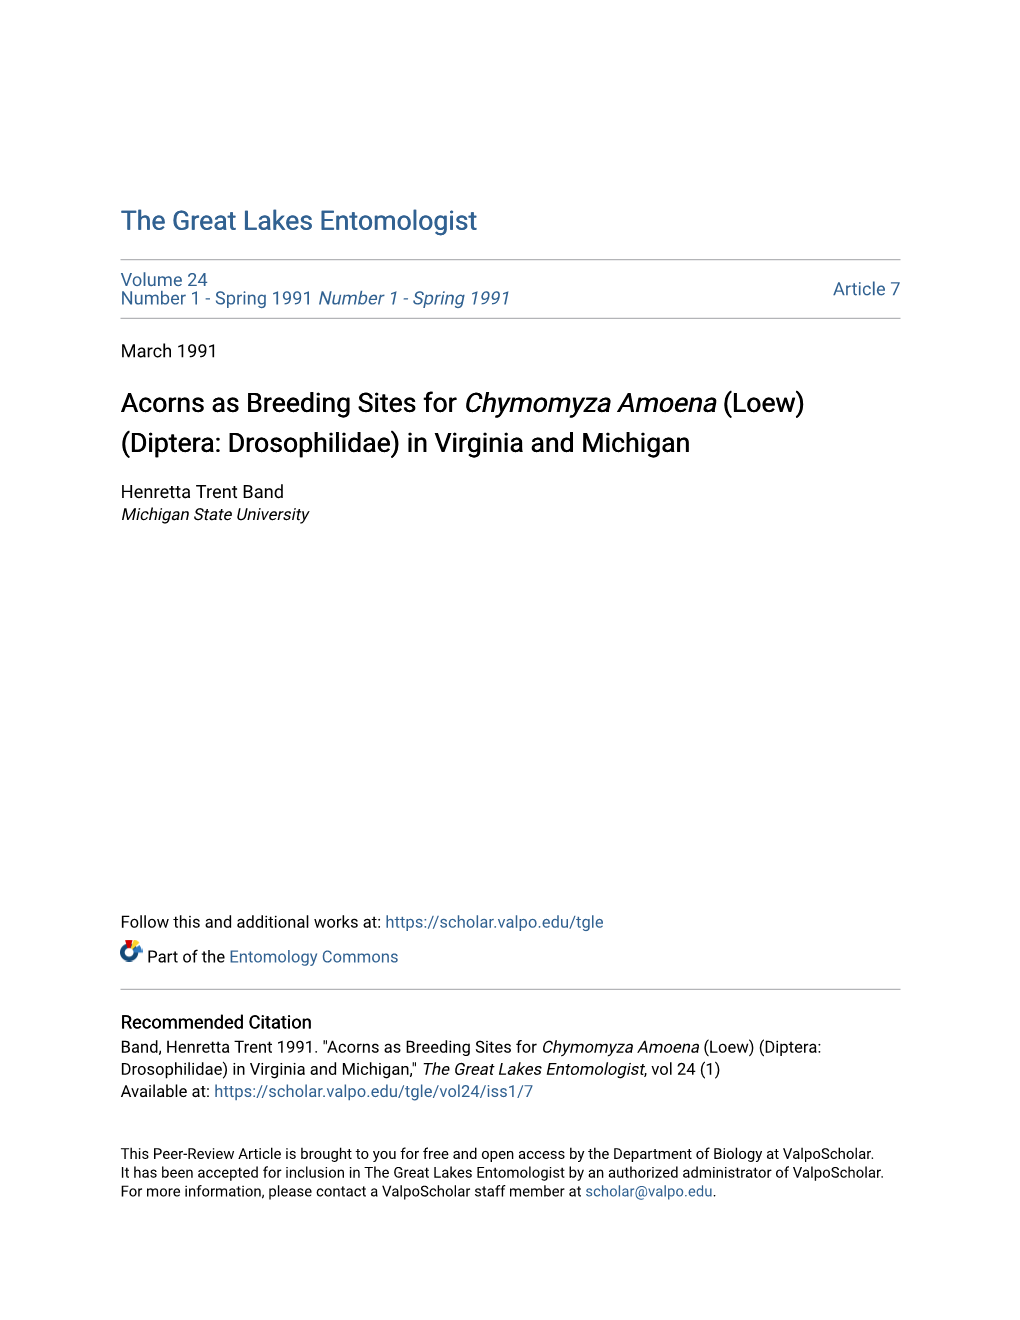 Acorns As Breeding Sites for Chymomyza Amoena (Loew) (Diptera: Drosophilidae) in Virginia and Michigan